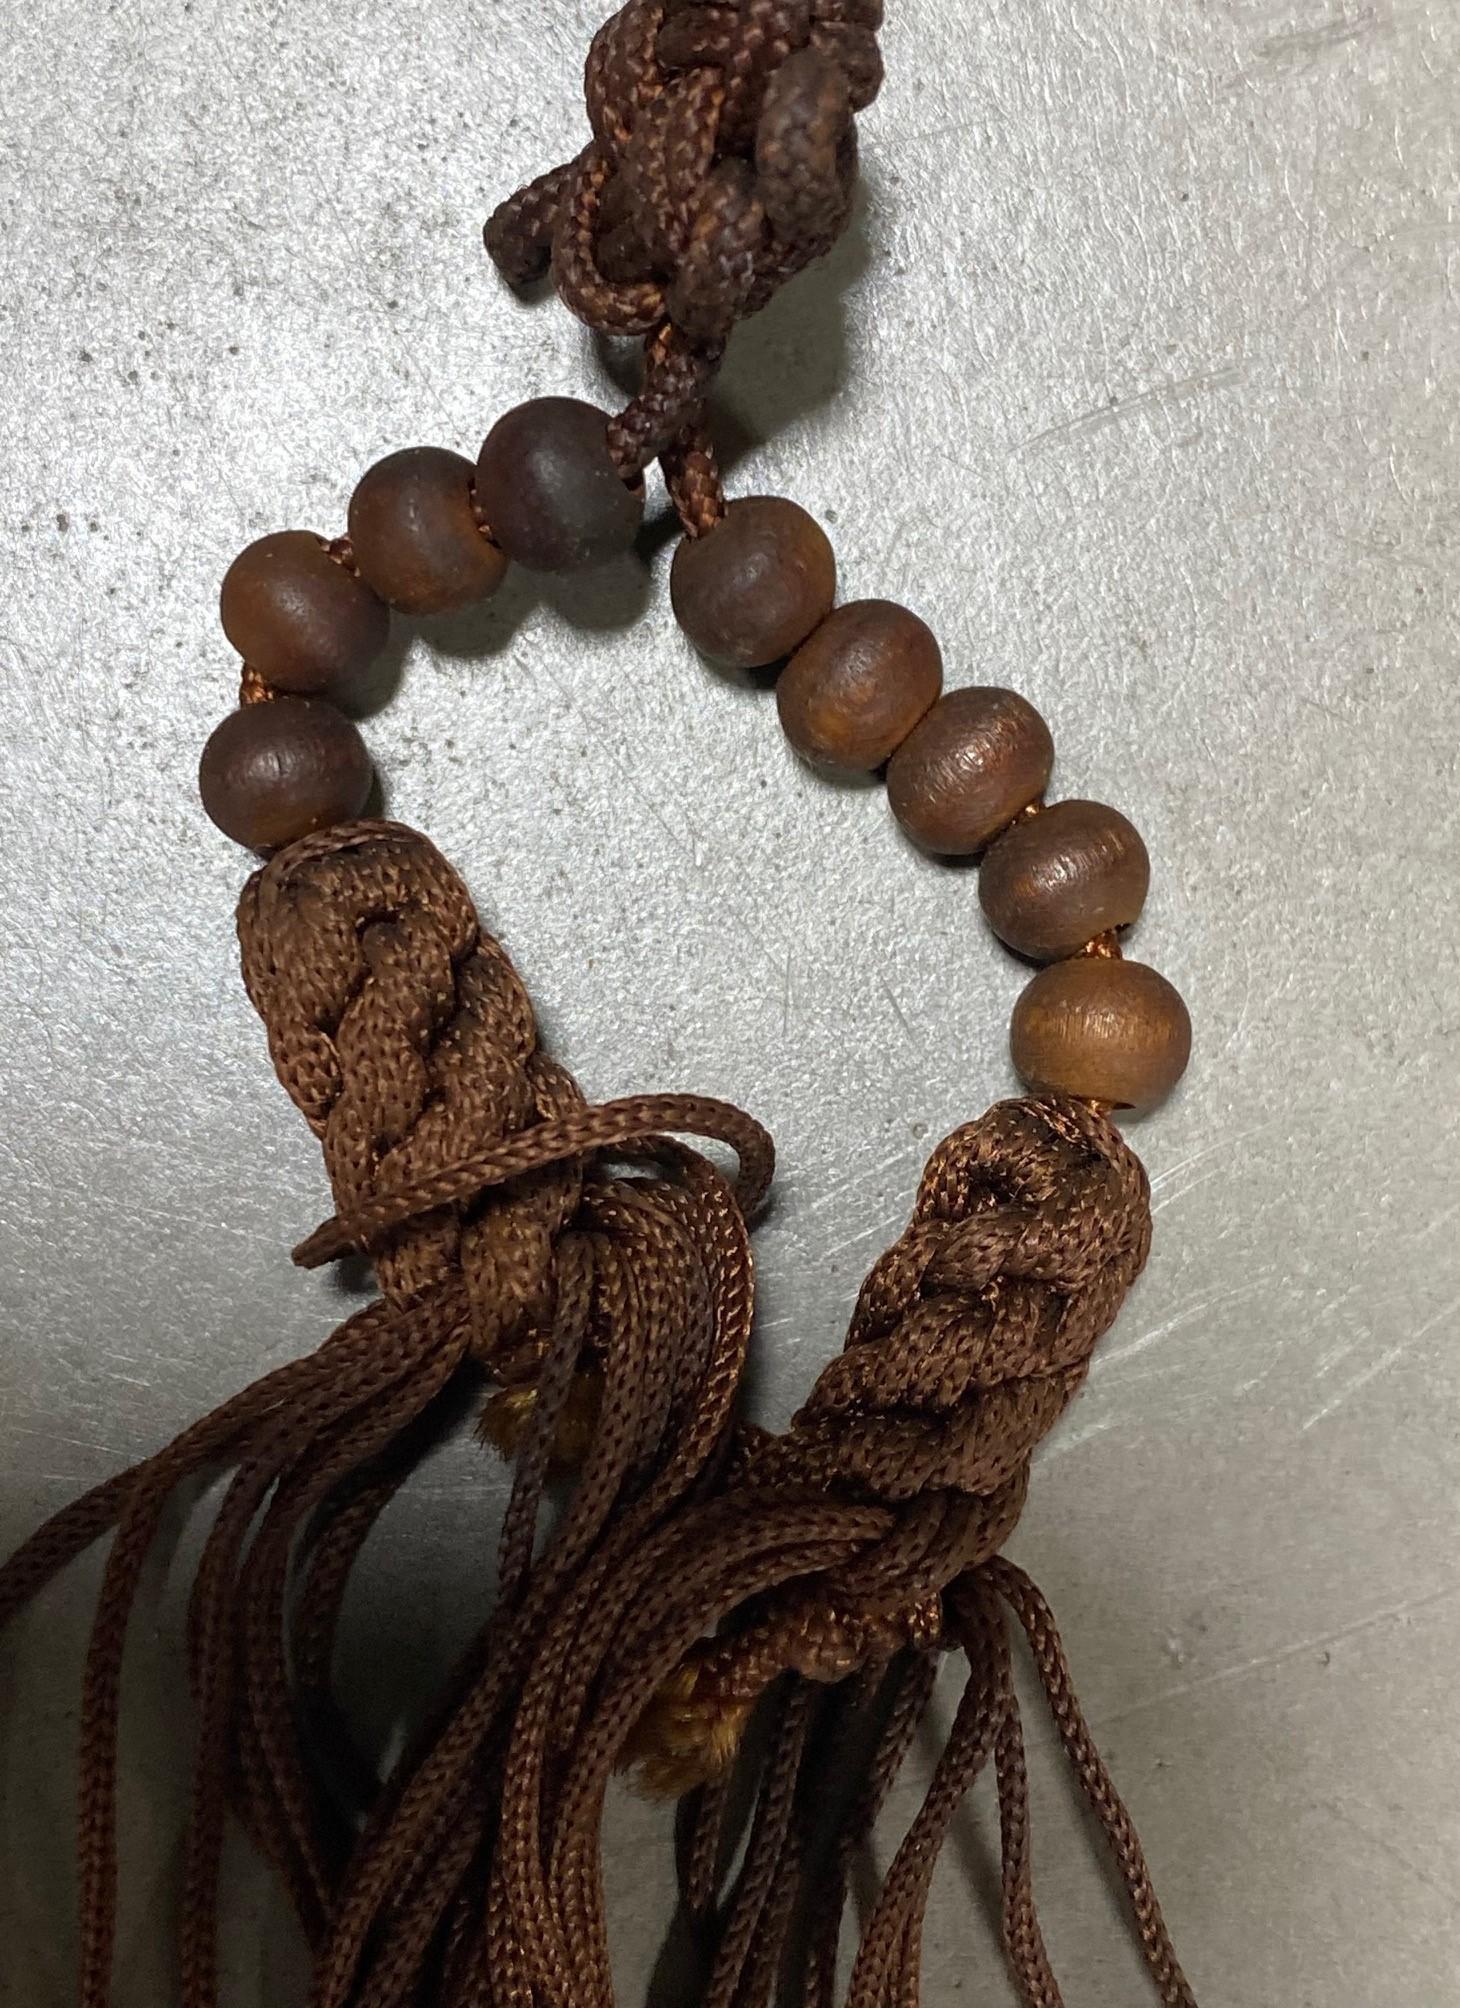 Japanese Temple Shrine Buddhist Monk Juzu Prayer Beads Mala Rosary Necklace  1